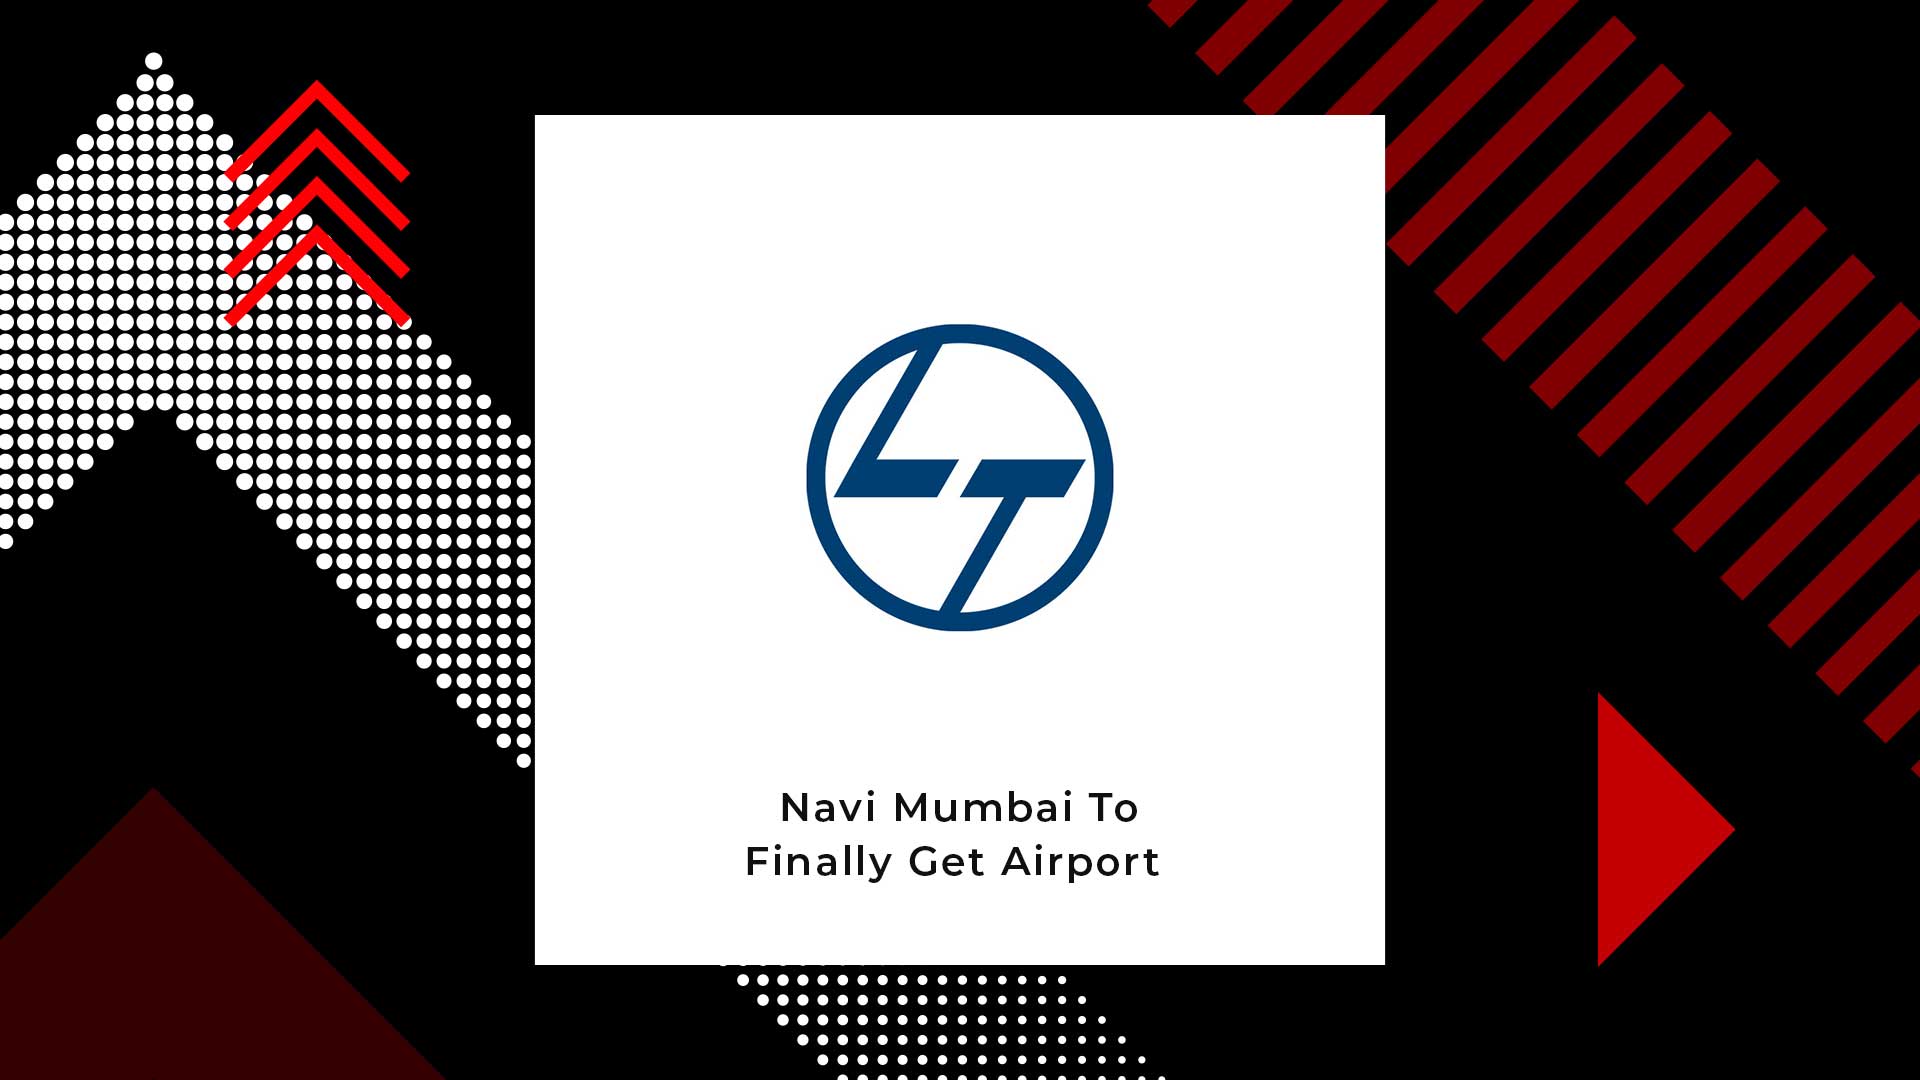 L T Construction Chosen To Build Navi Mumbai S Airport Realtynxt